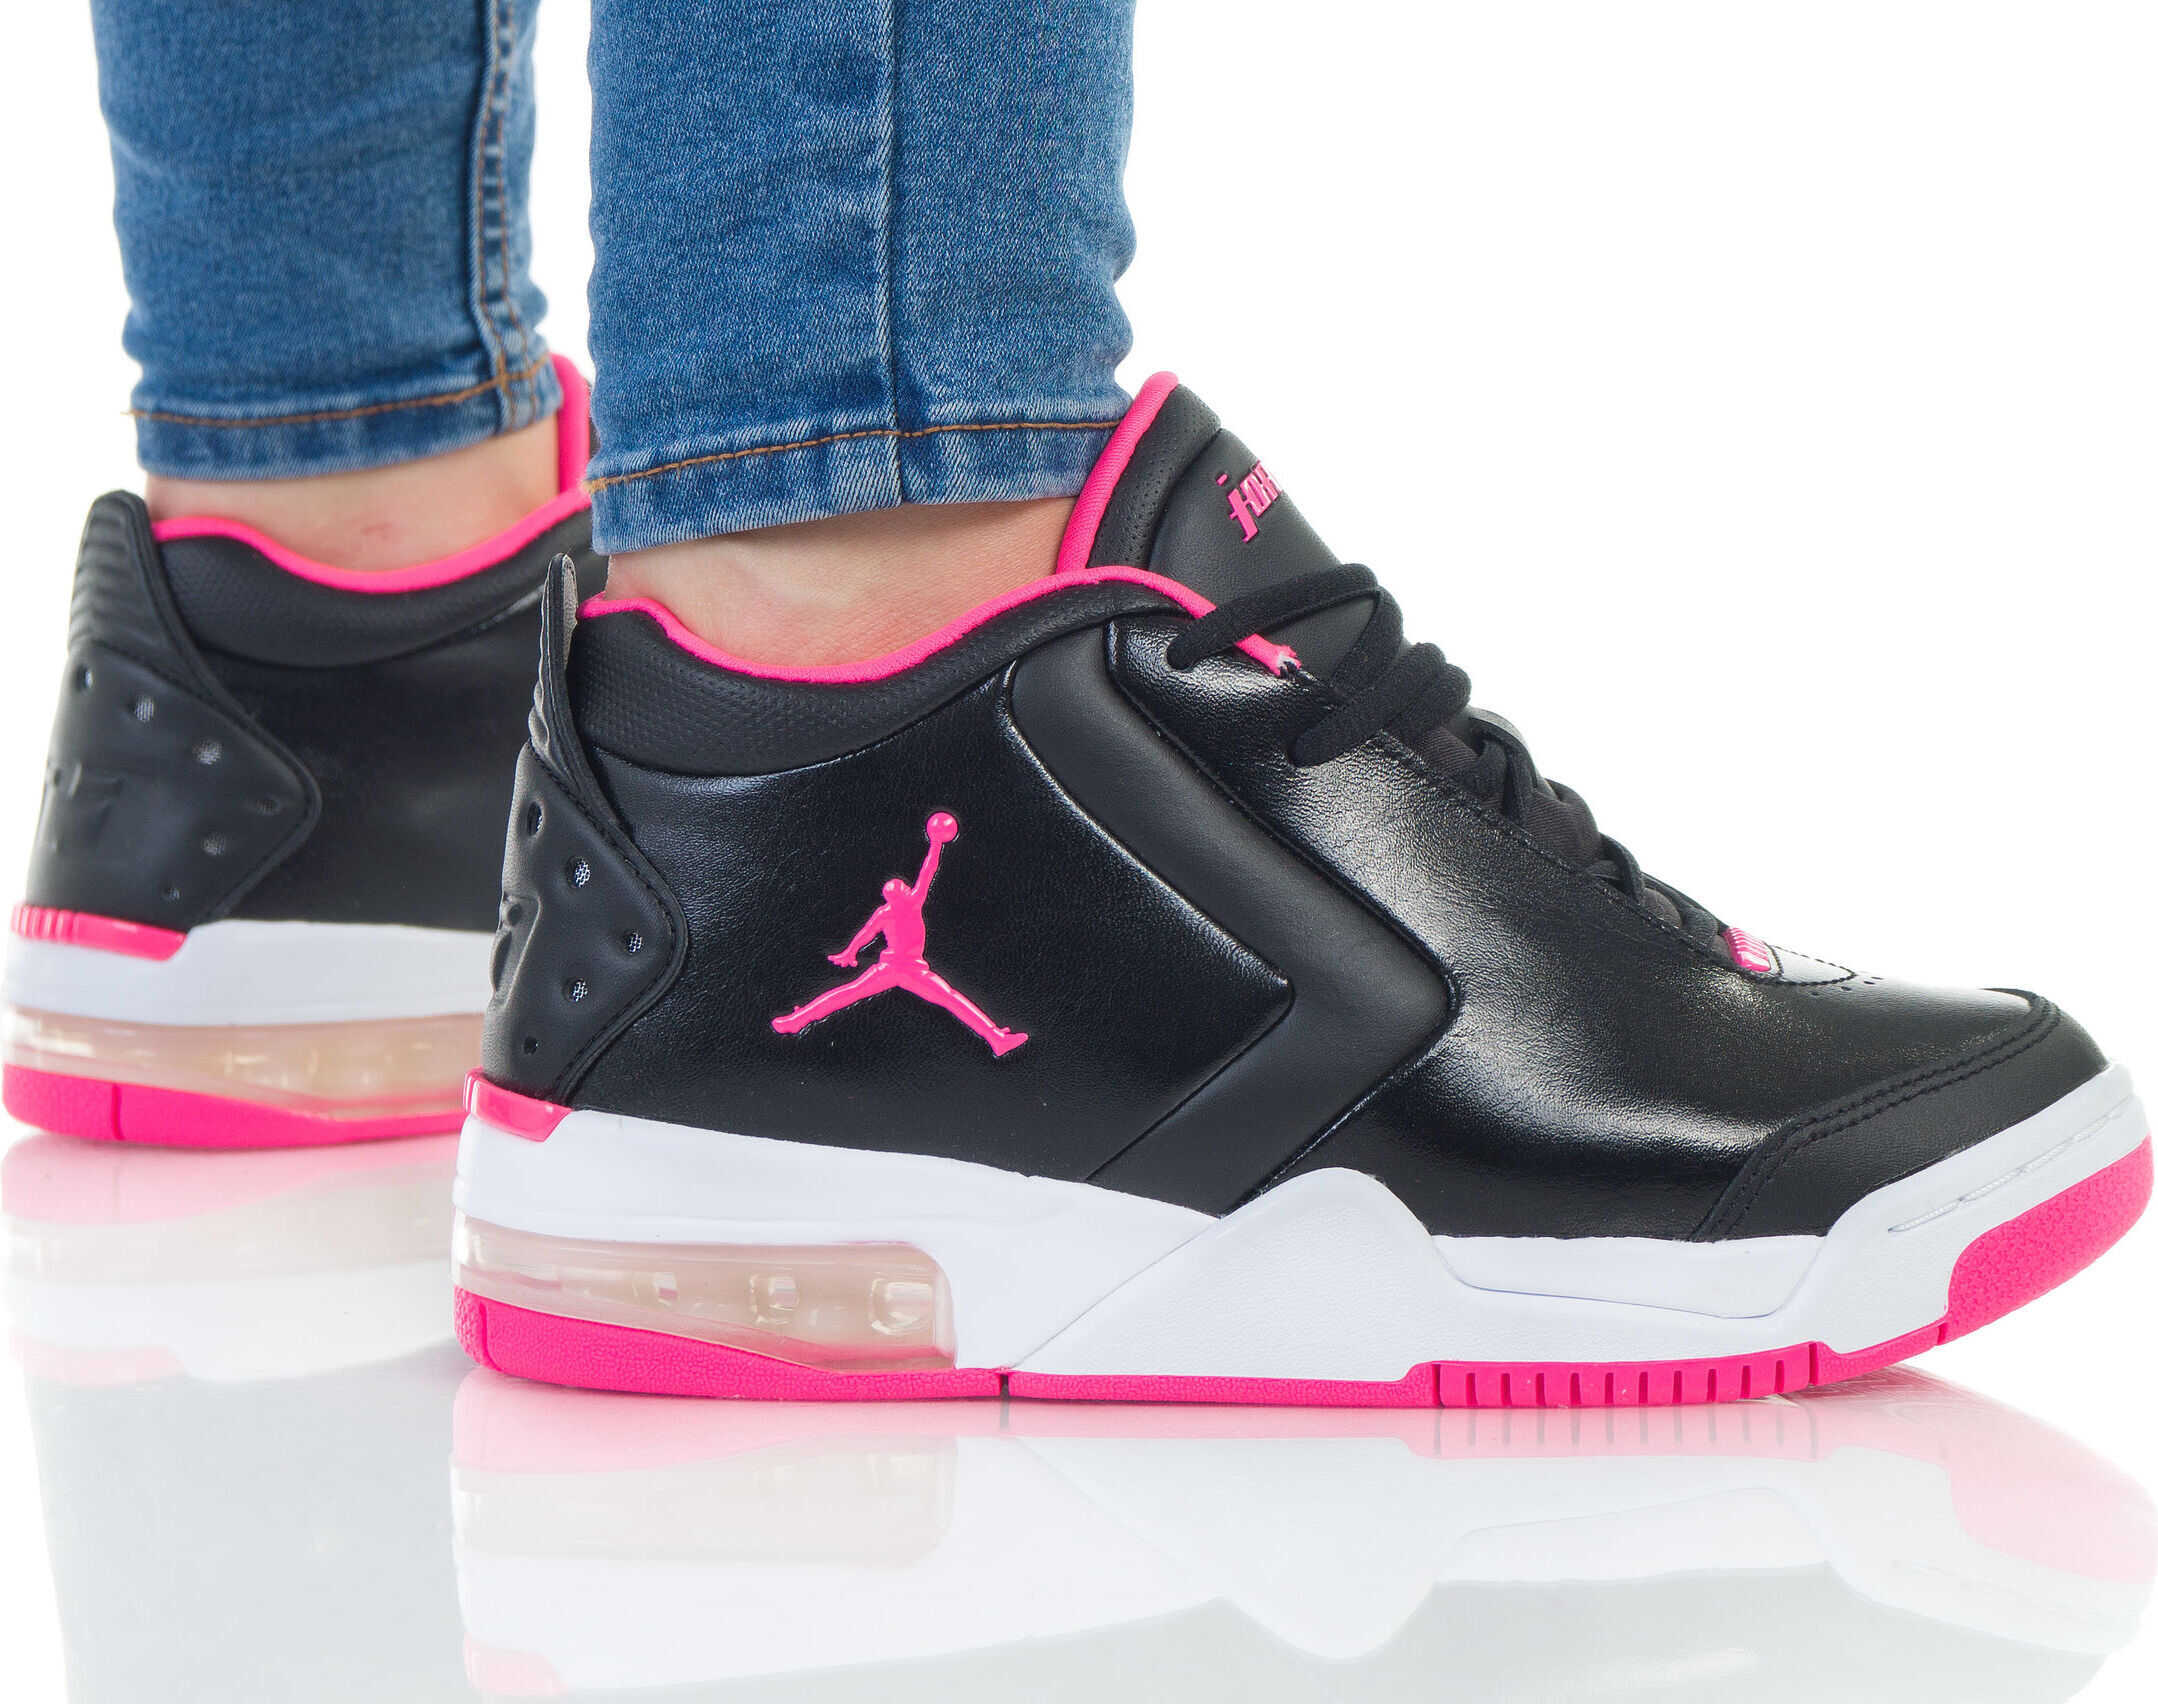 Sneakers Nike Air Jordan Big Fund Gs Negru Baieti Boutique Mall Romania 4664